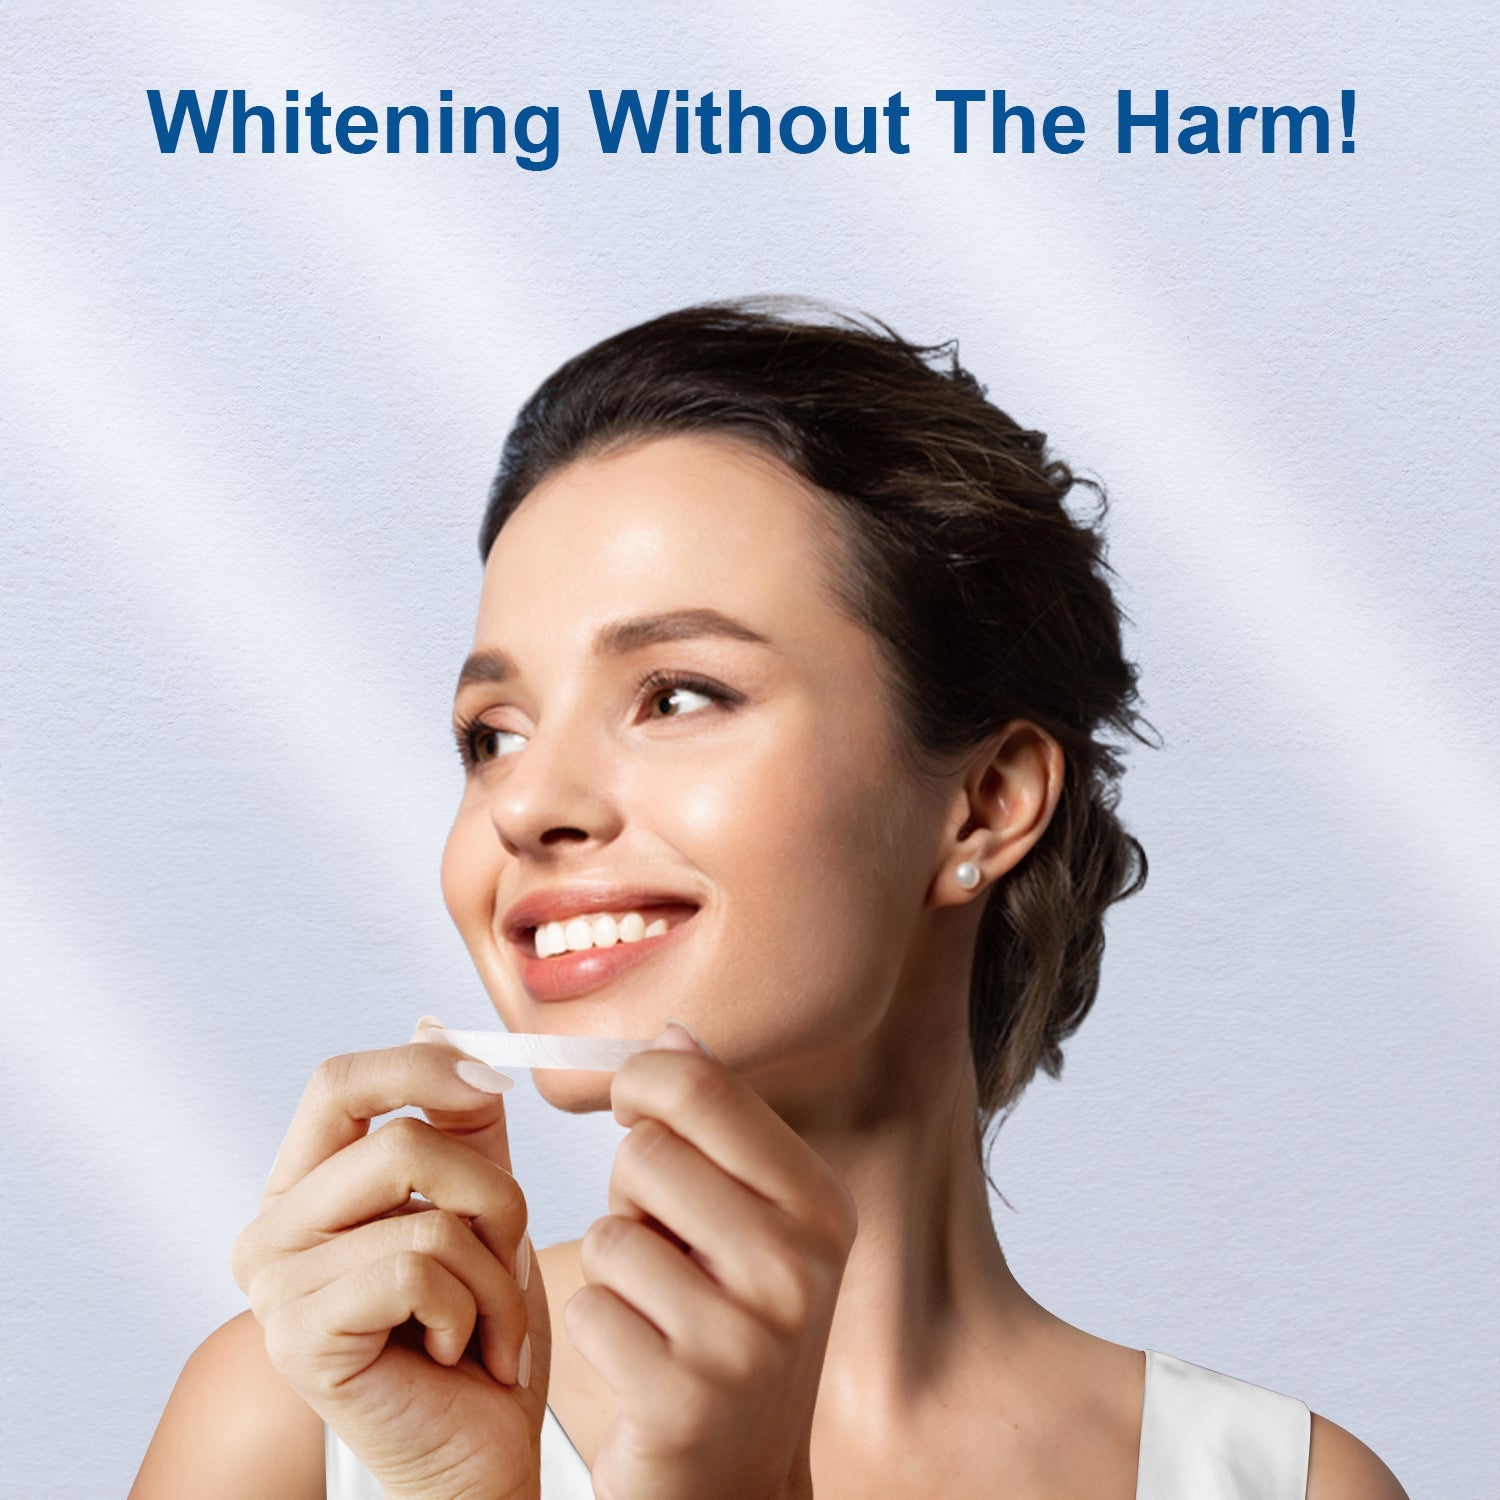 Teeth Whitening Strips (14 Pack) - MySmile